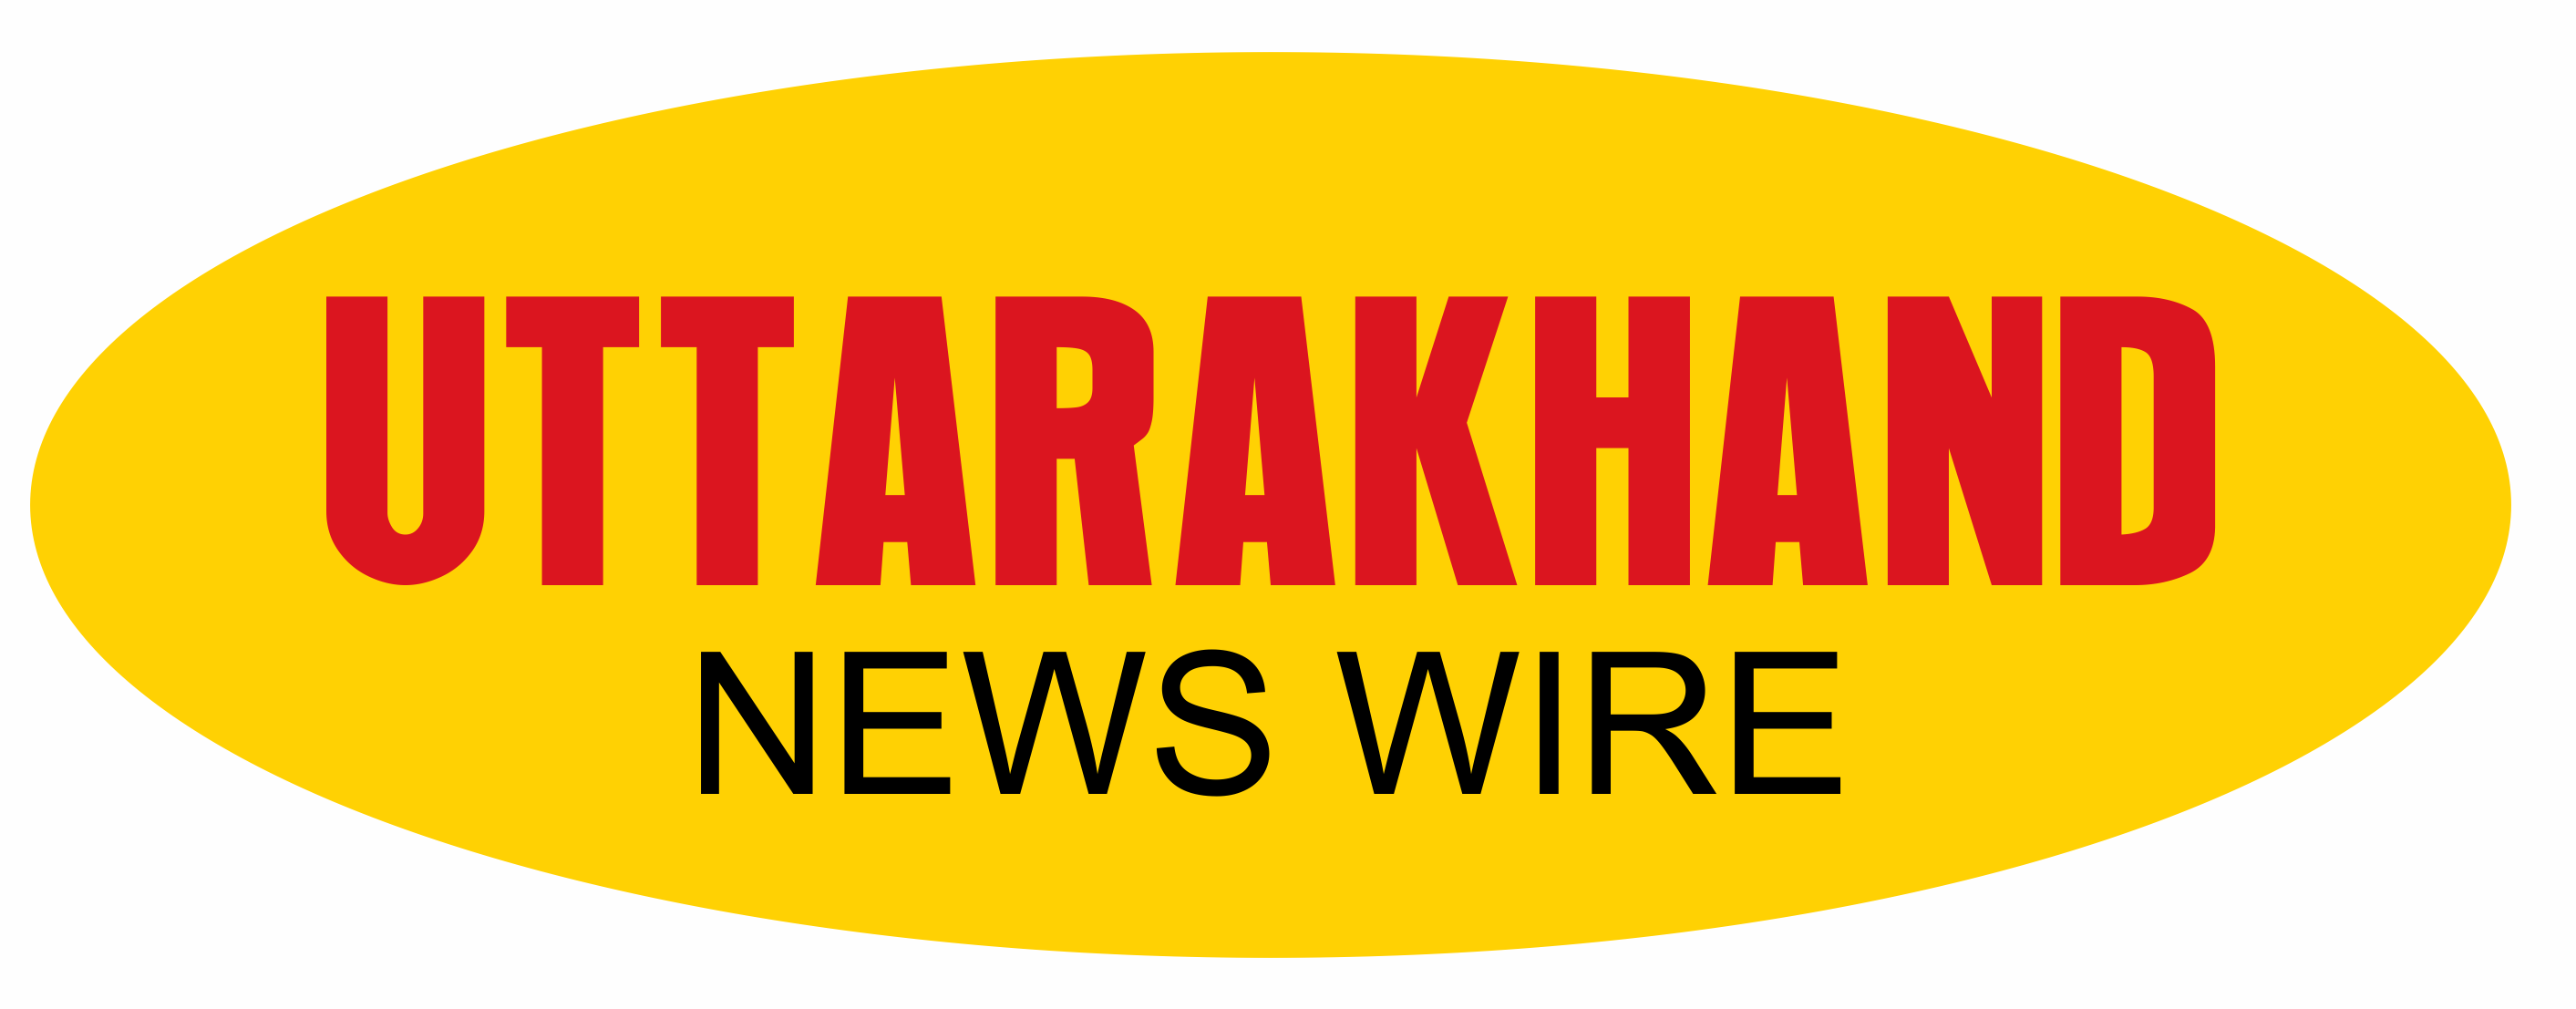 Uttarakhand News Wire